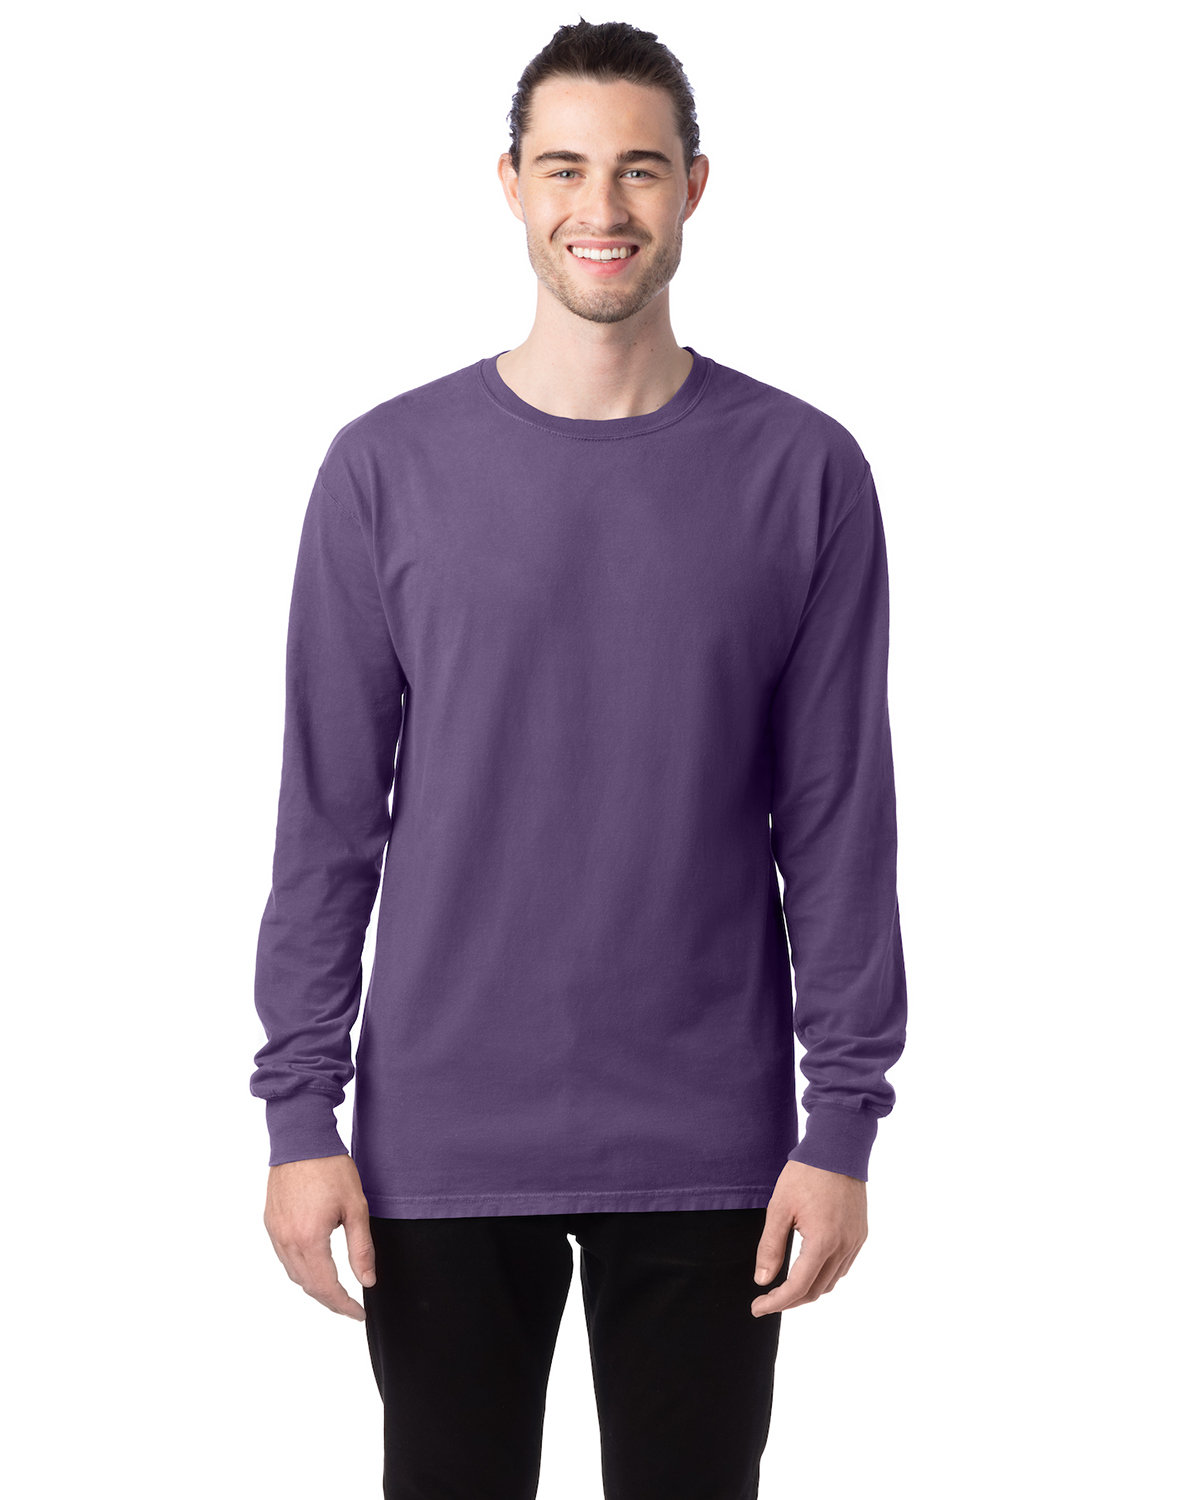 ComfortWash by Hanes Unisex Garment-Dyed Long-Sleeve T-Shirt GRAPE SODA 